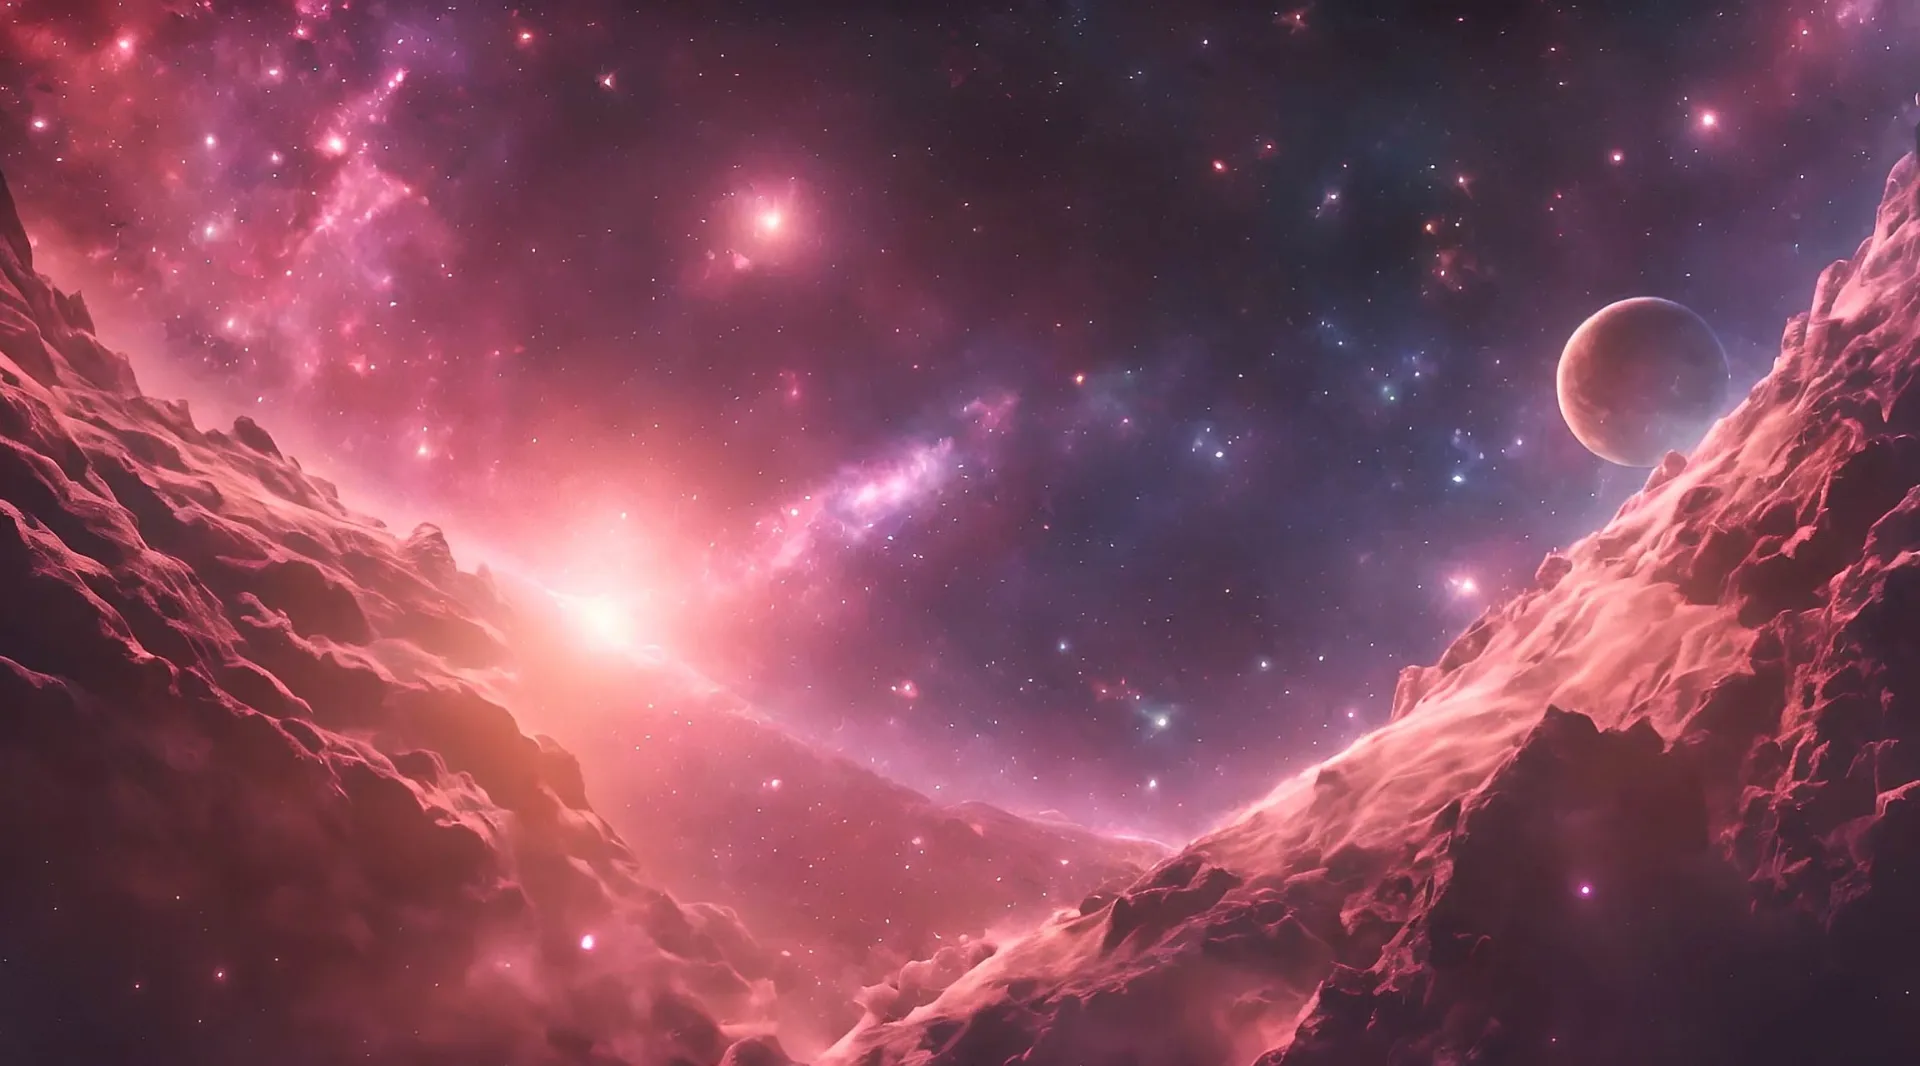 Surreal Planetary Surface with Cosmic Nebula Backdrop